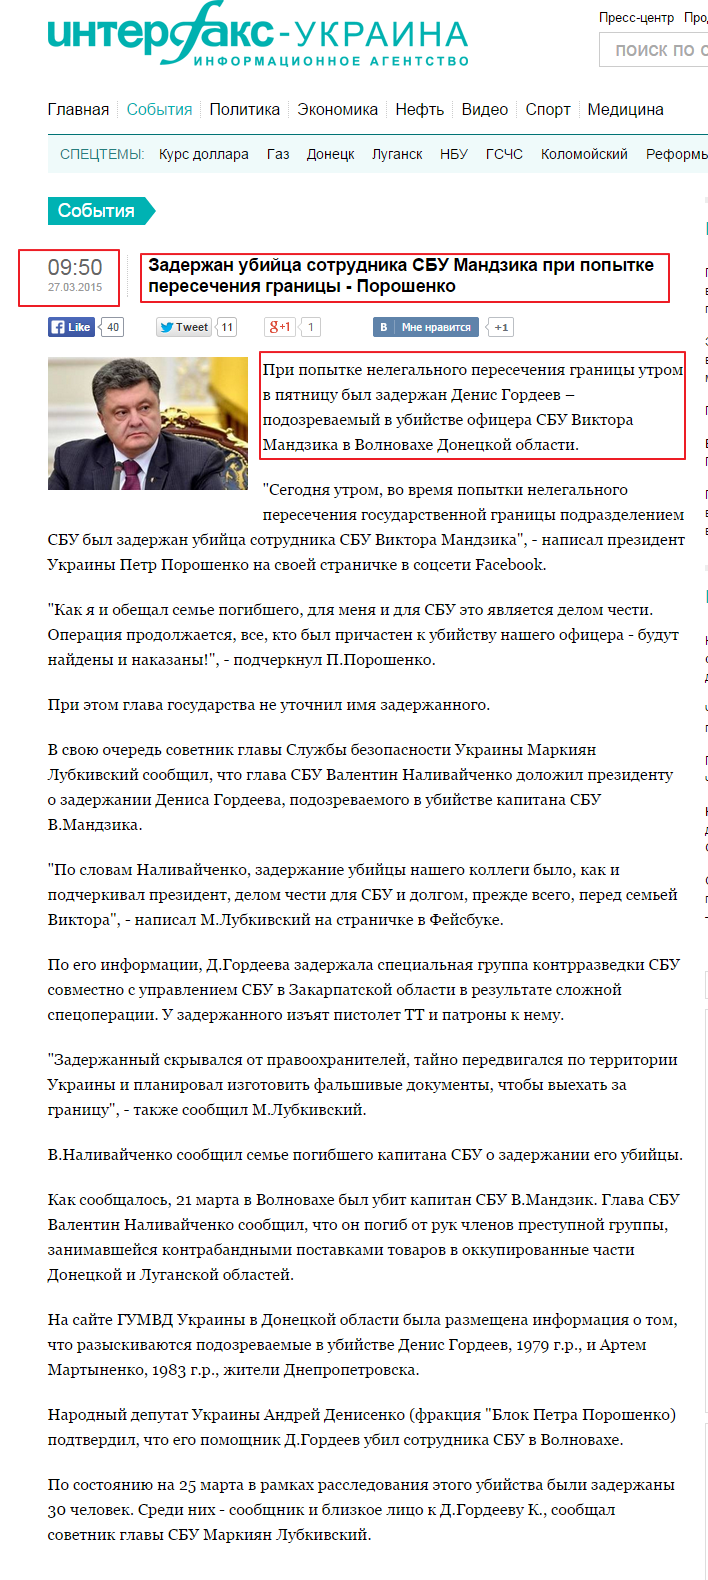 http://interfax.com.ua/news/general/257337.html